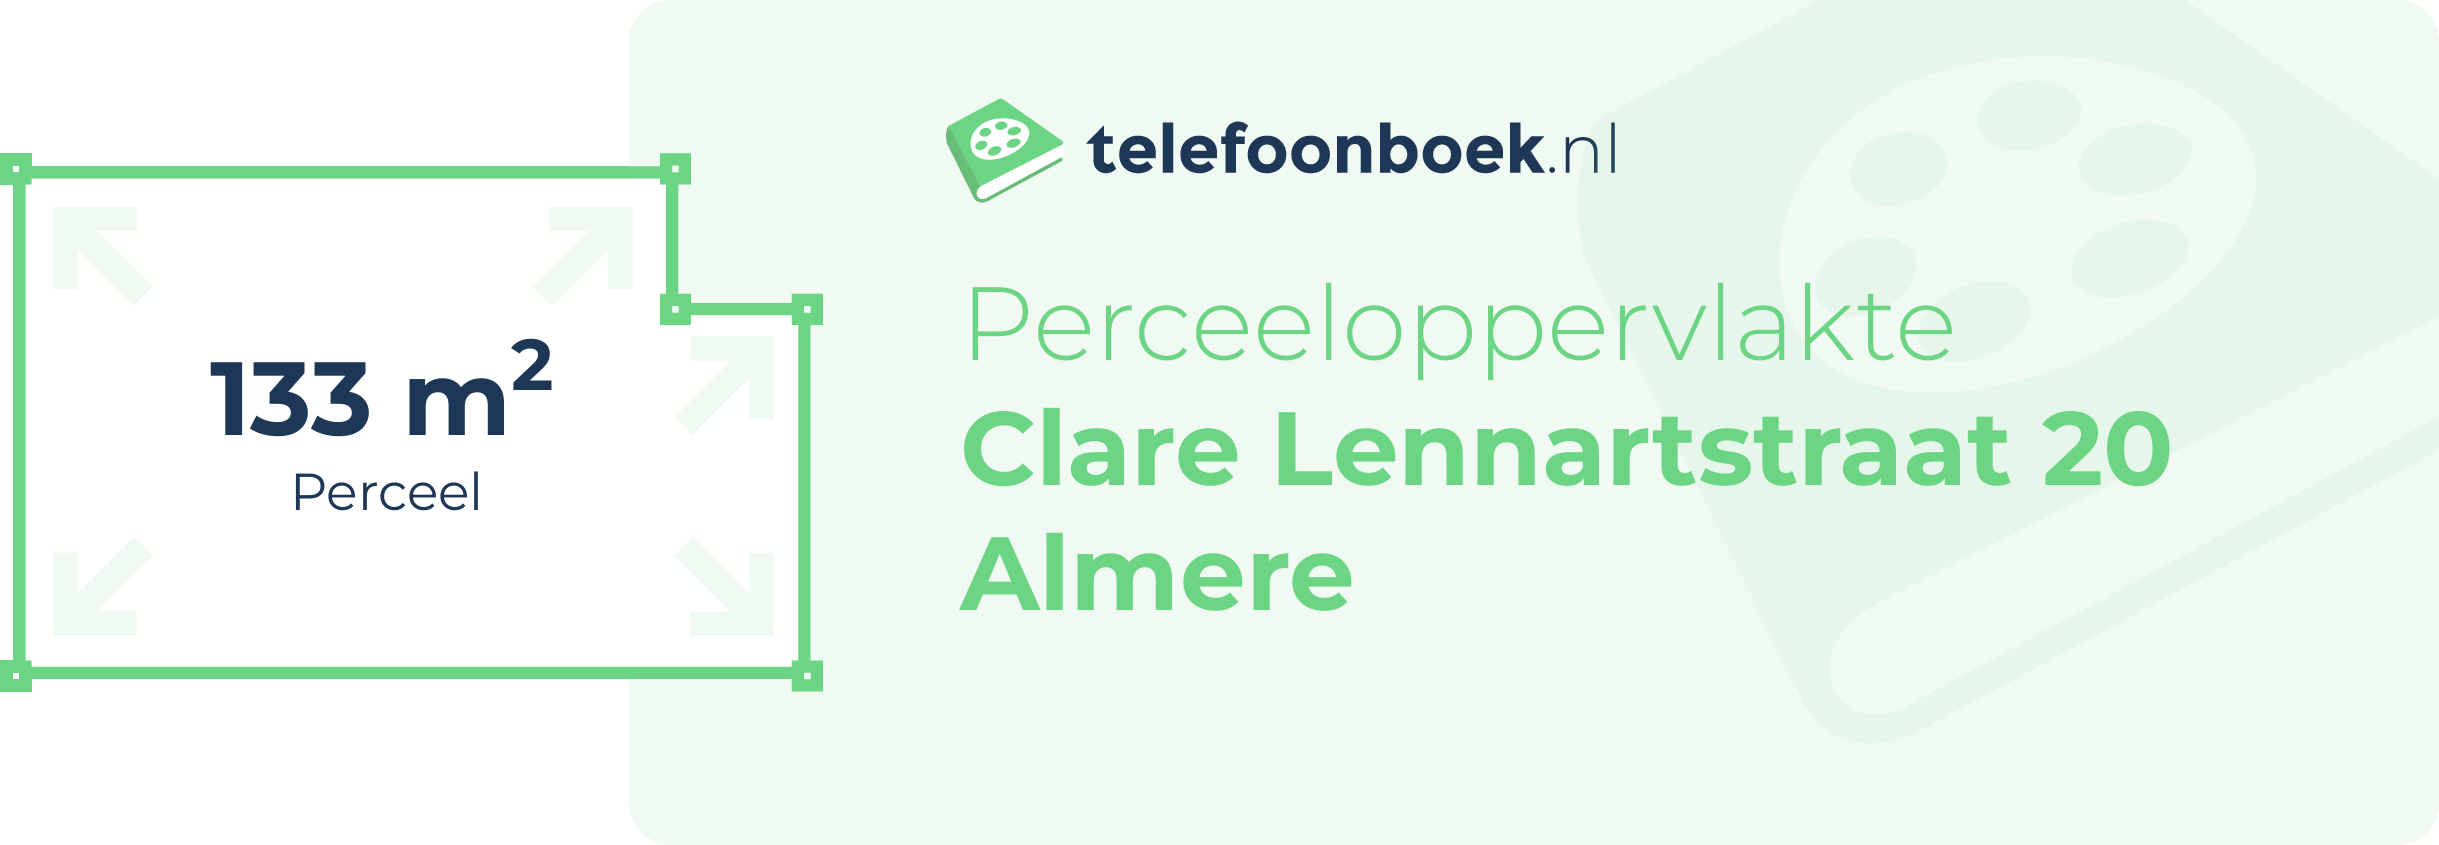 Perceeloppervlakte Clare Lennartstraat 20 Almere